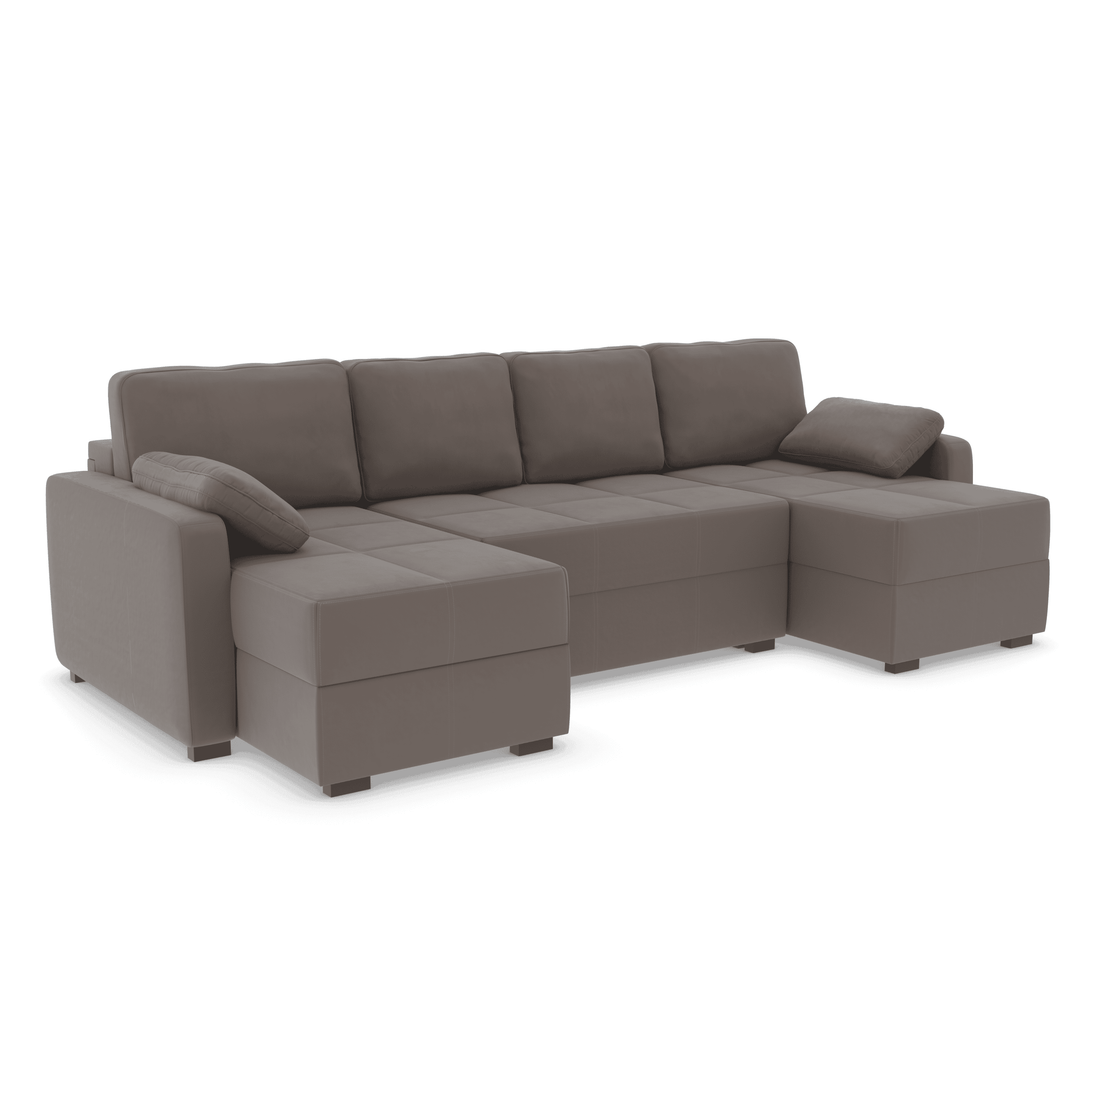 Harry Large Corner Modular Sofa Bed